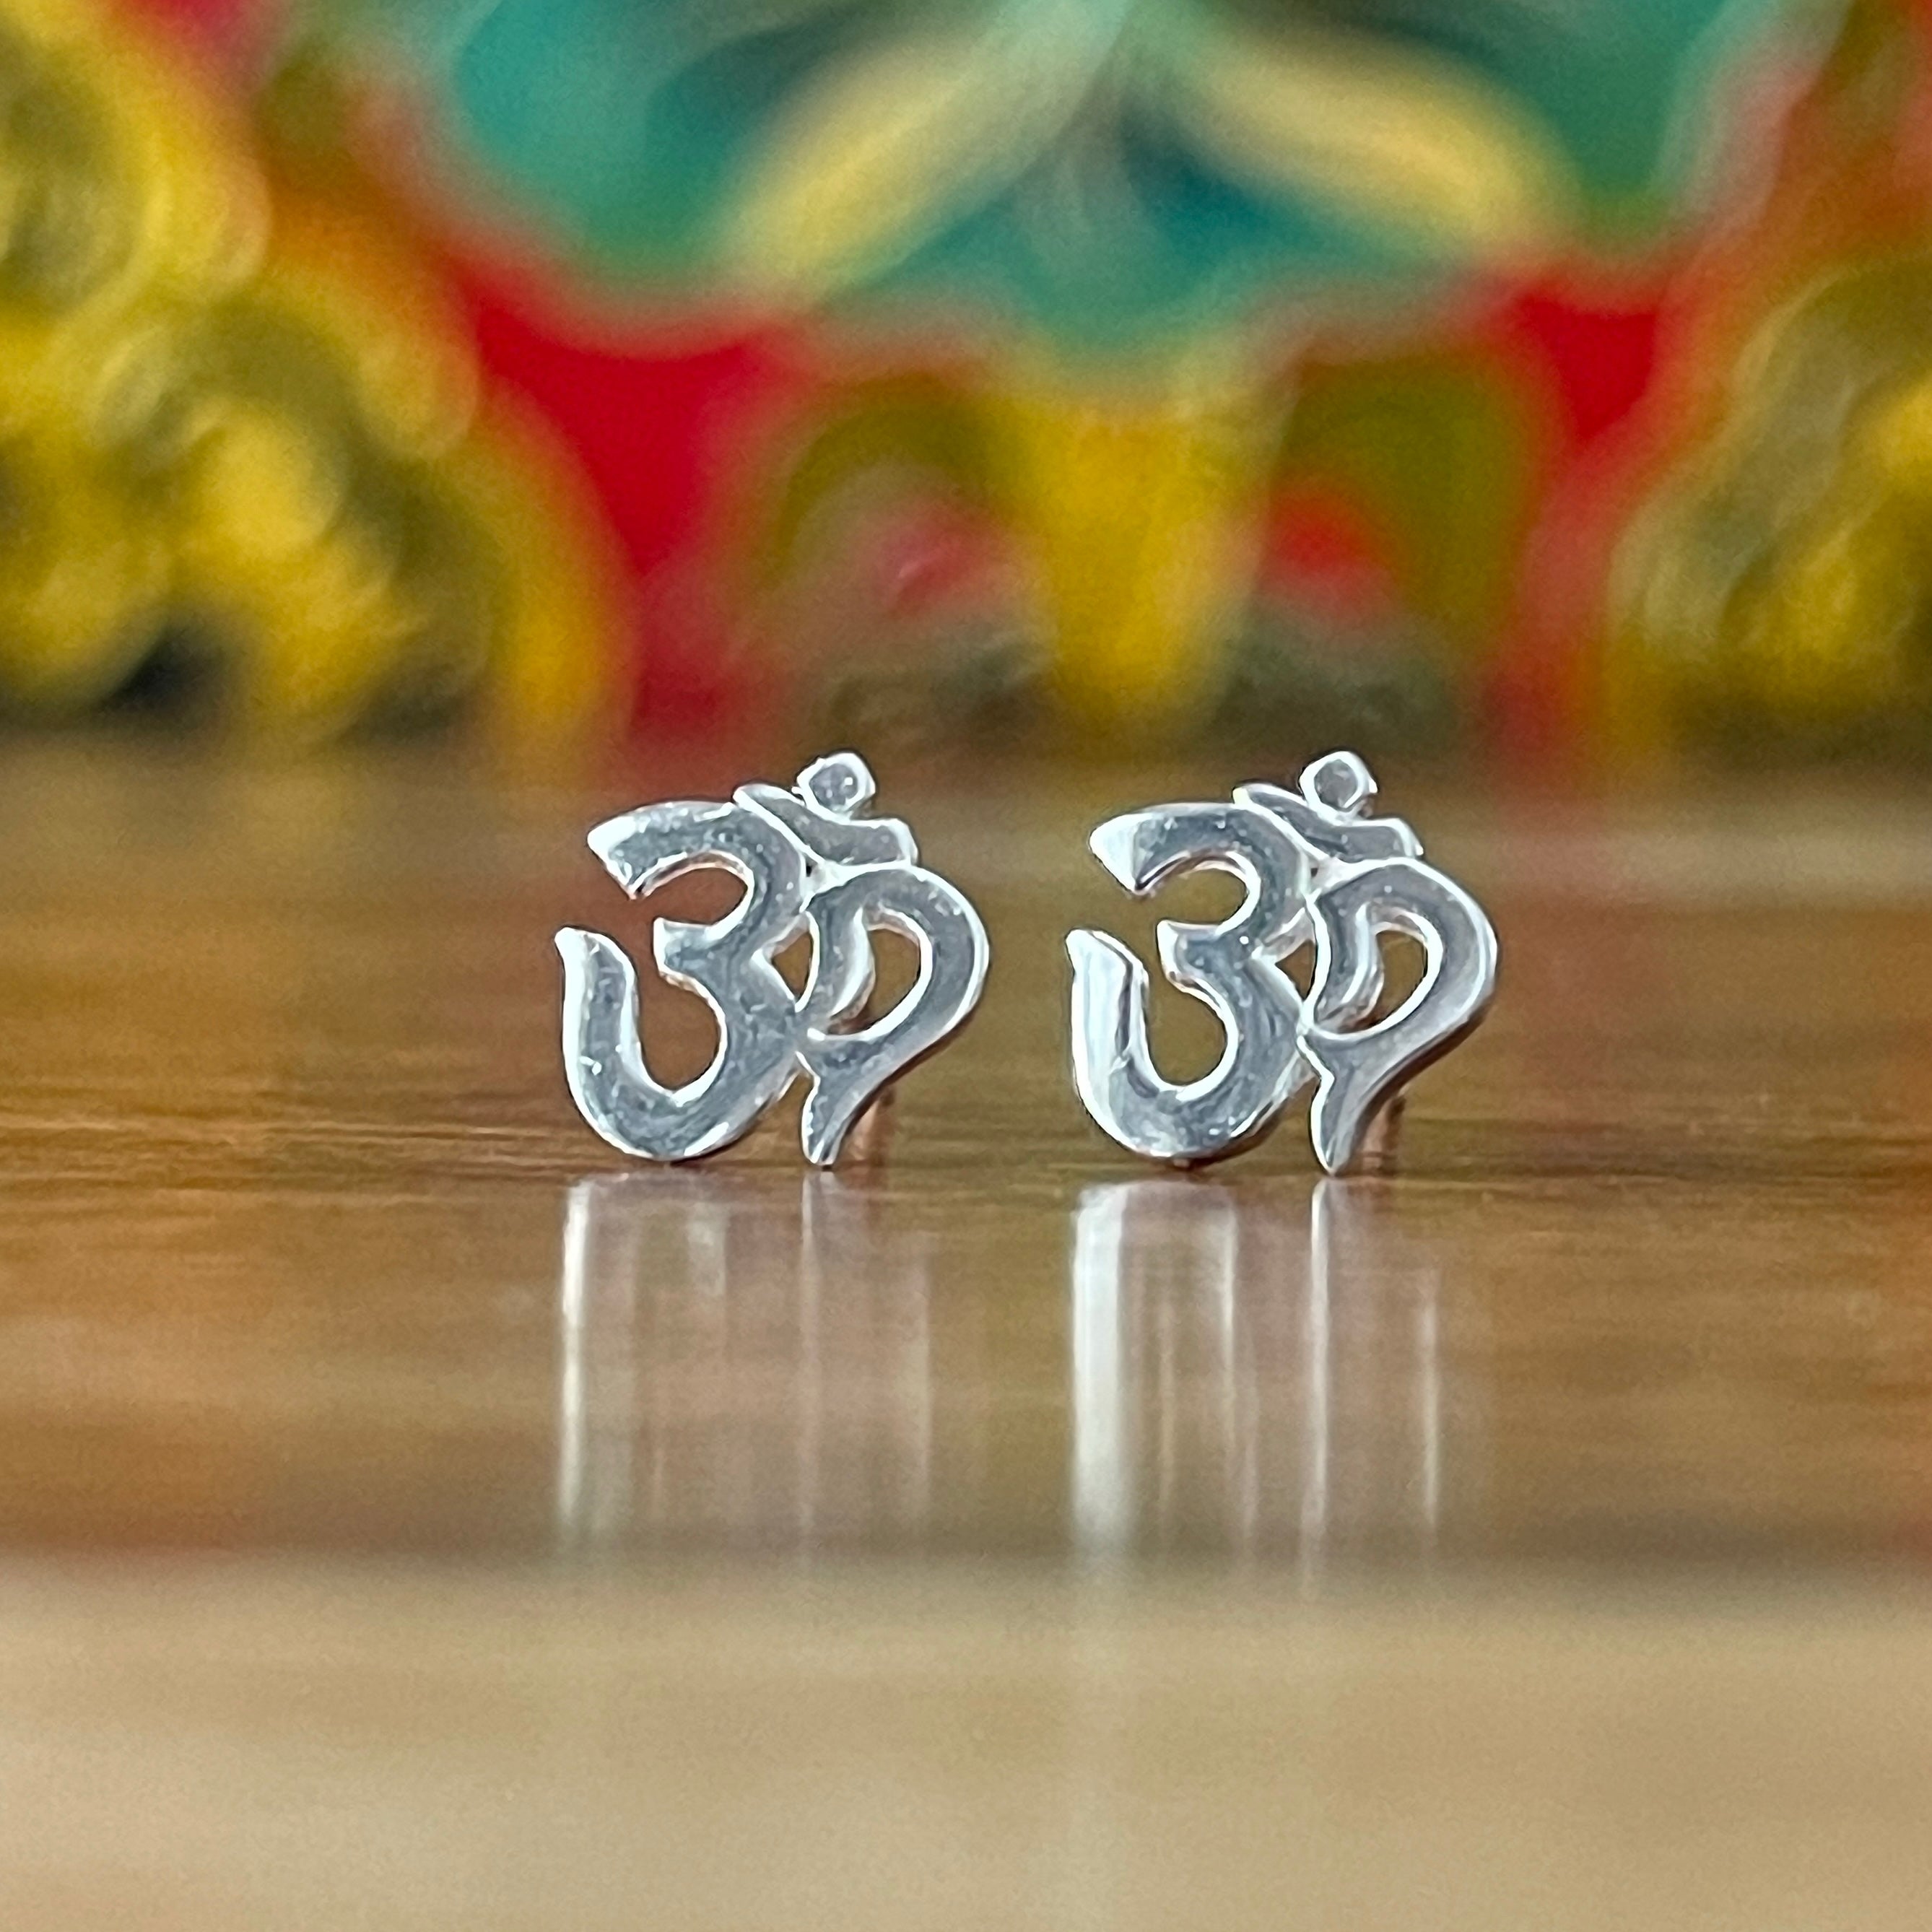 Om Stud Earrings 925 Sterling Silver – The Buddha Buddha